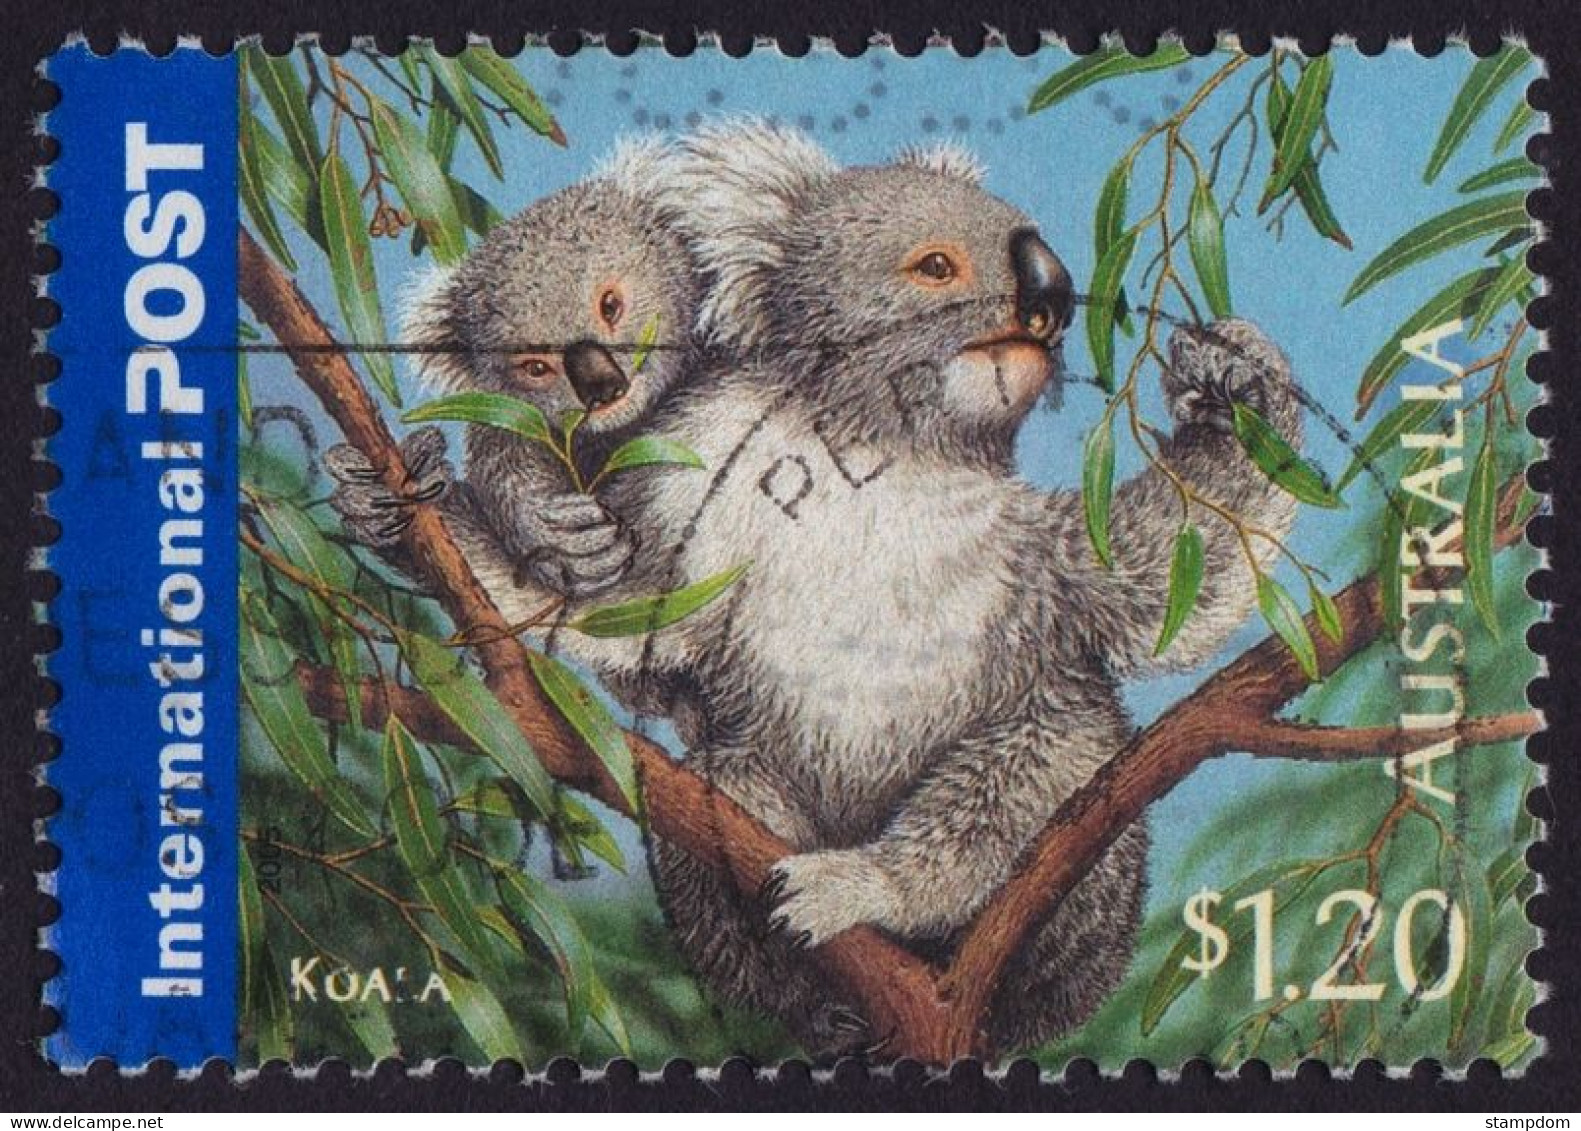 AUSTRALIA  2005 Animals Int'l Post $1.20 Koala Sc#2388 USED @O414 - Usados